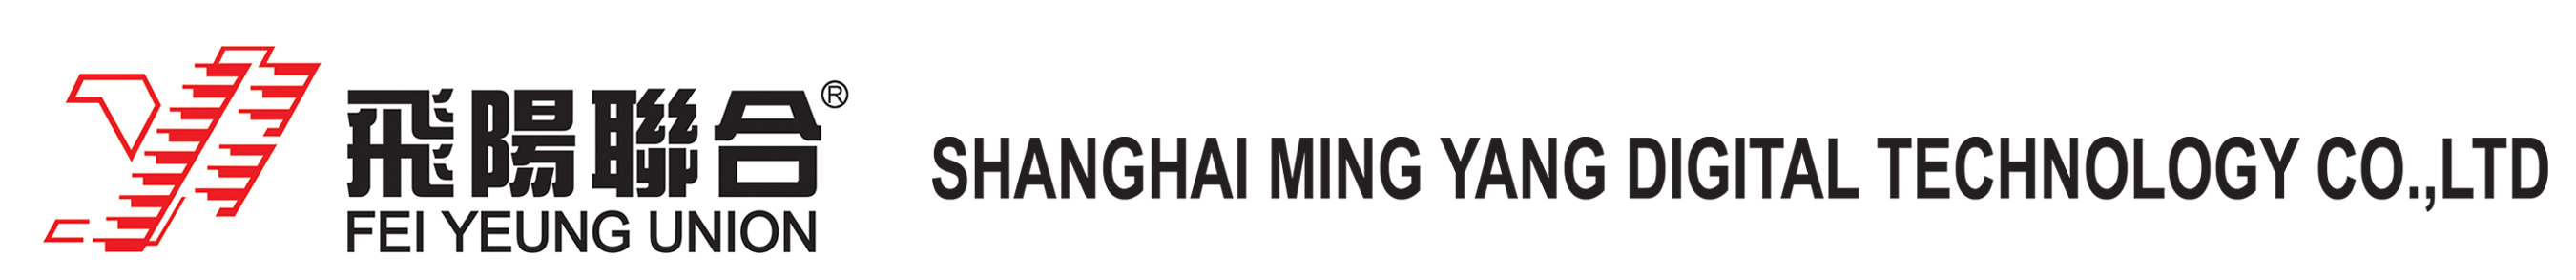 SHANGHAI MINGYANG DIGITIAL TECHNOLOGY CO.,LTD